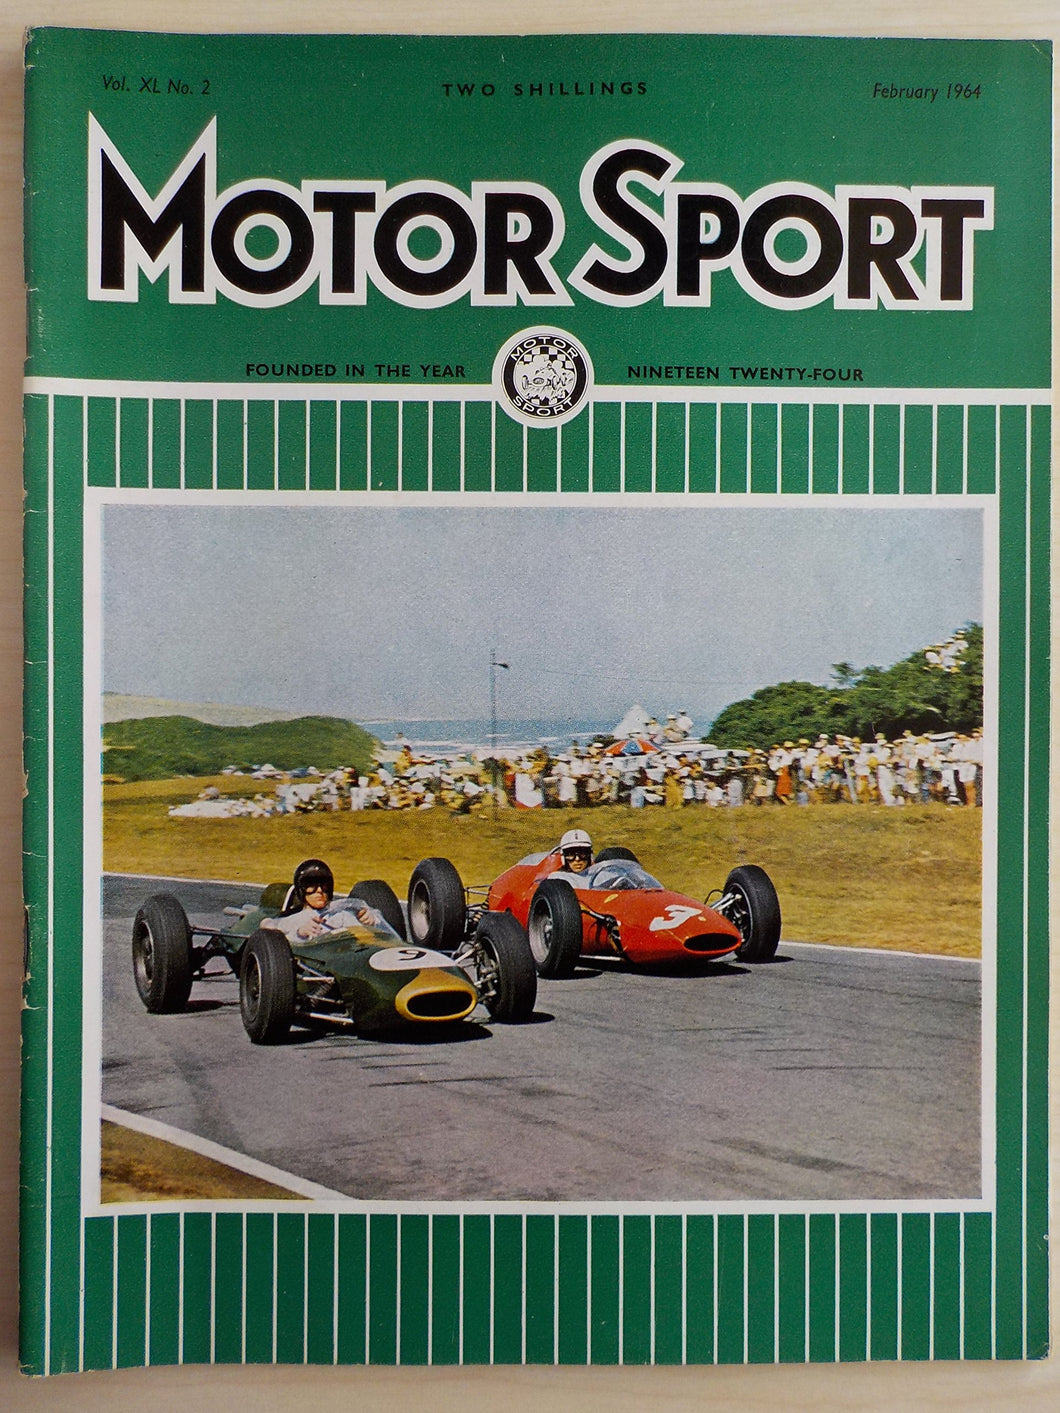 Motor Sport magazine Vol XL No 2 February 1964 [Paperback] William Boddy and Denis Jenkinson